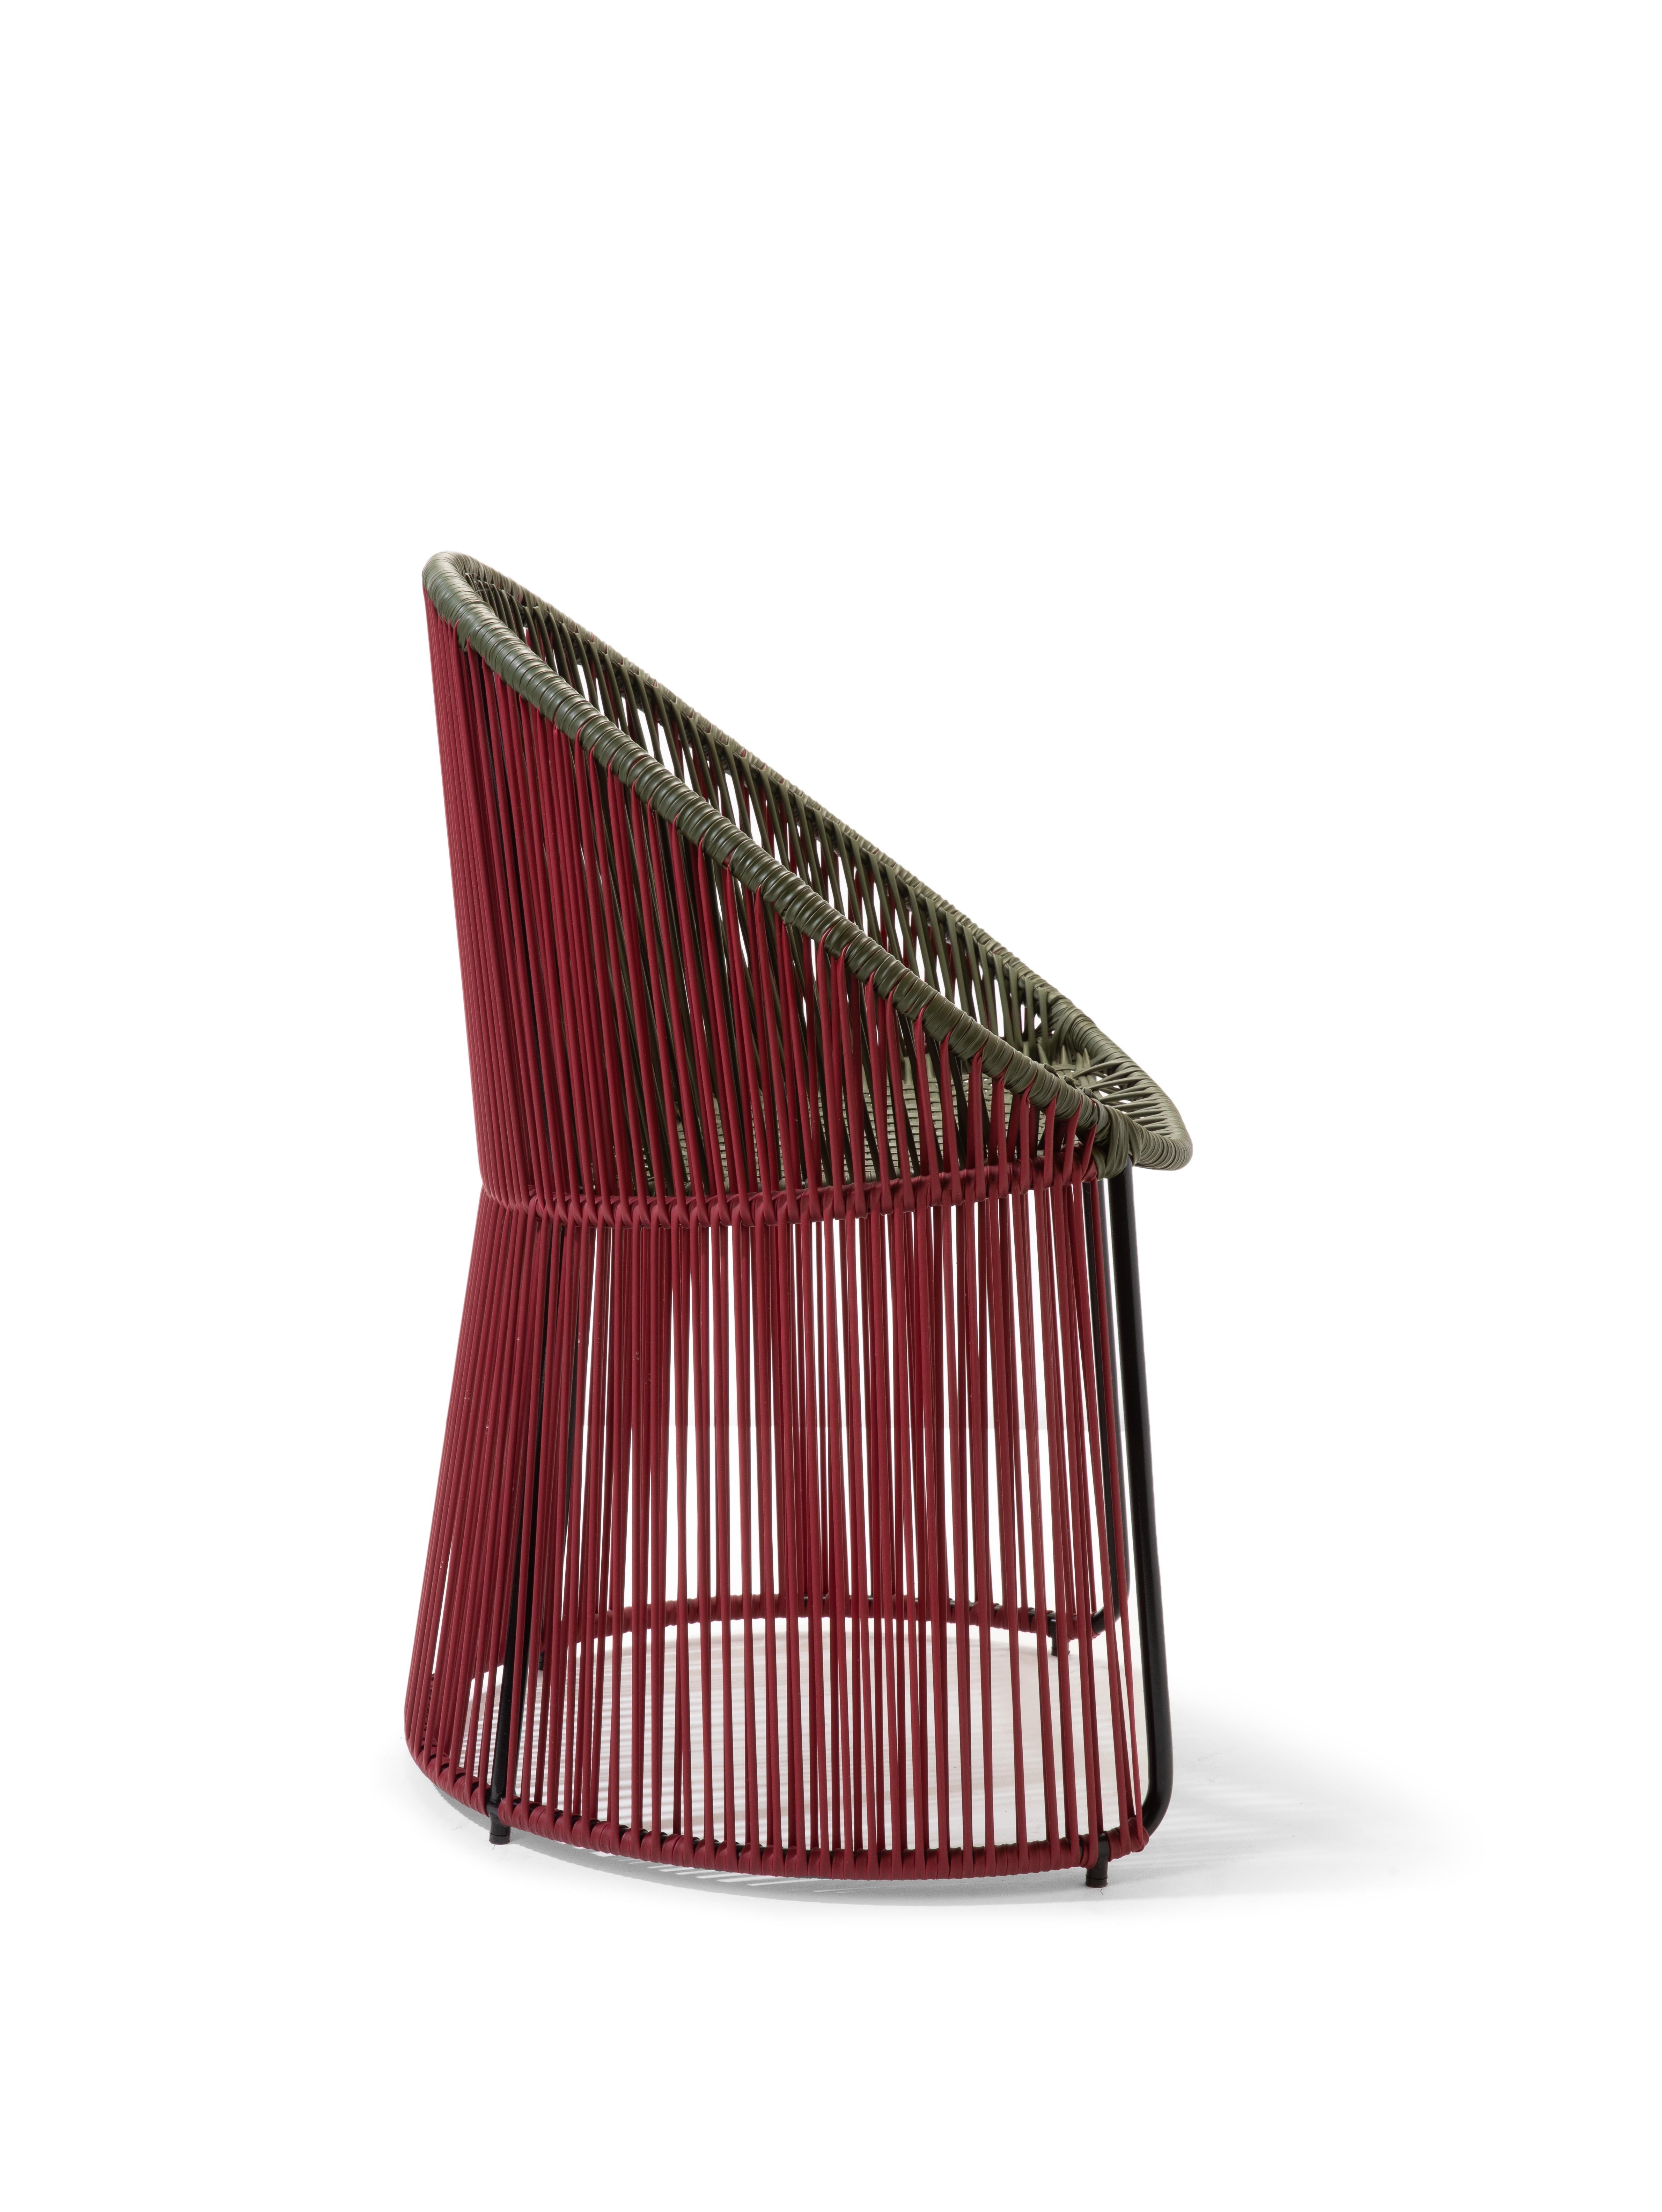 Modern Olive Cartagenas Dining Chair by Sebastian Herkner